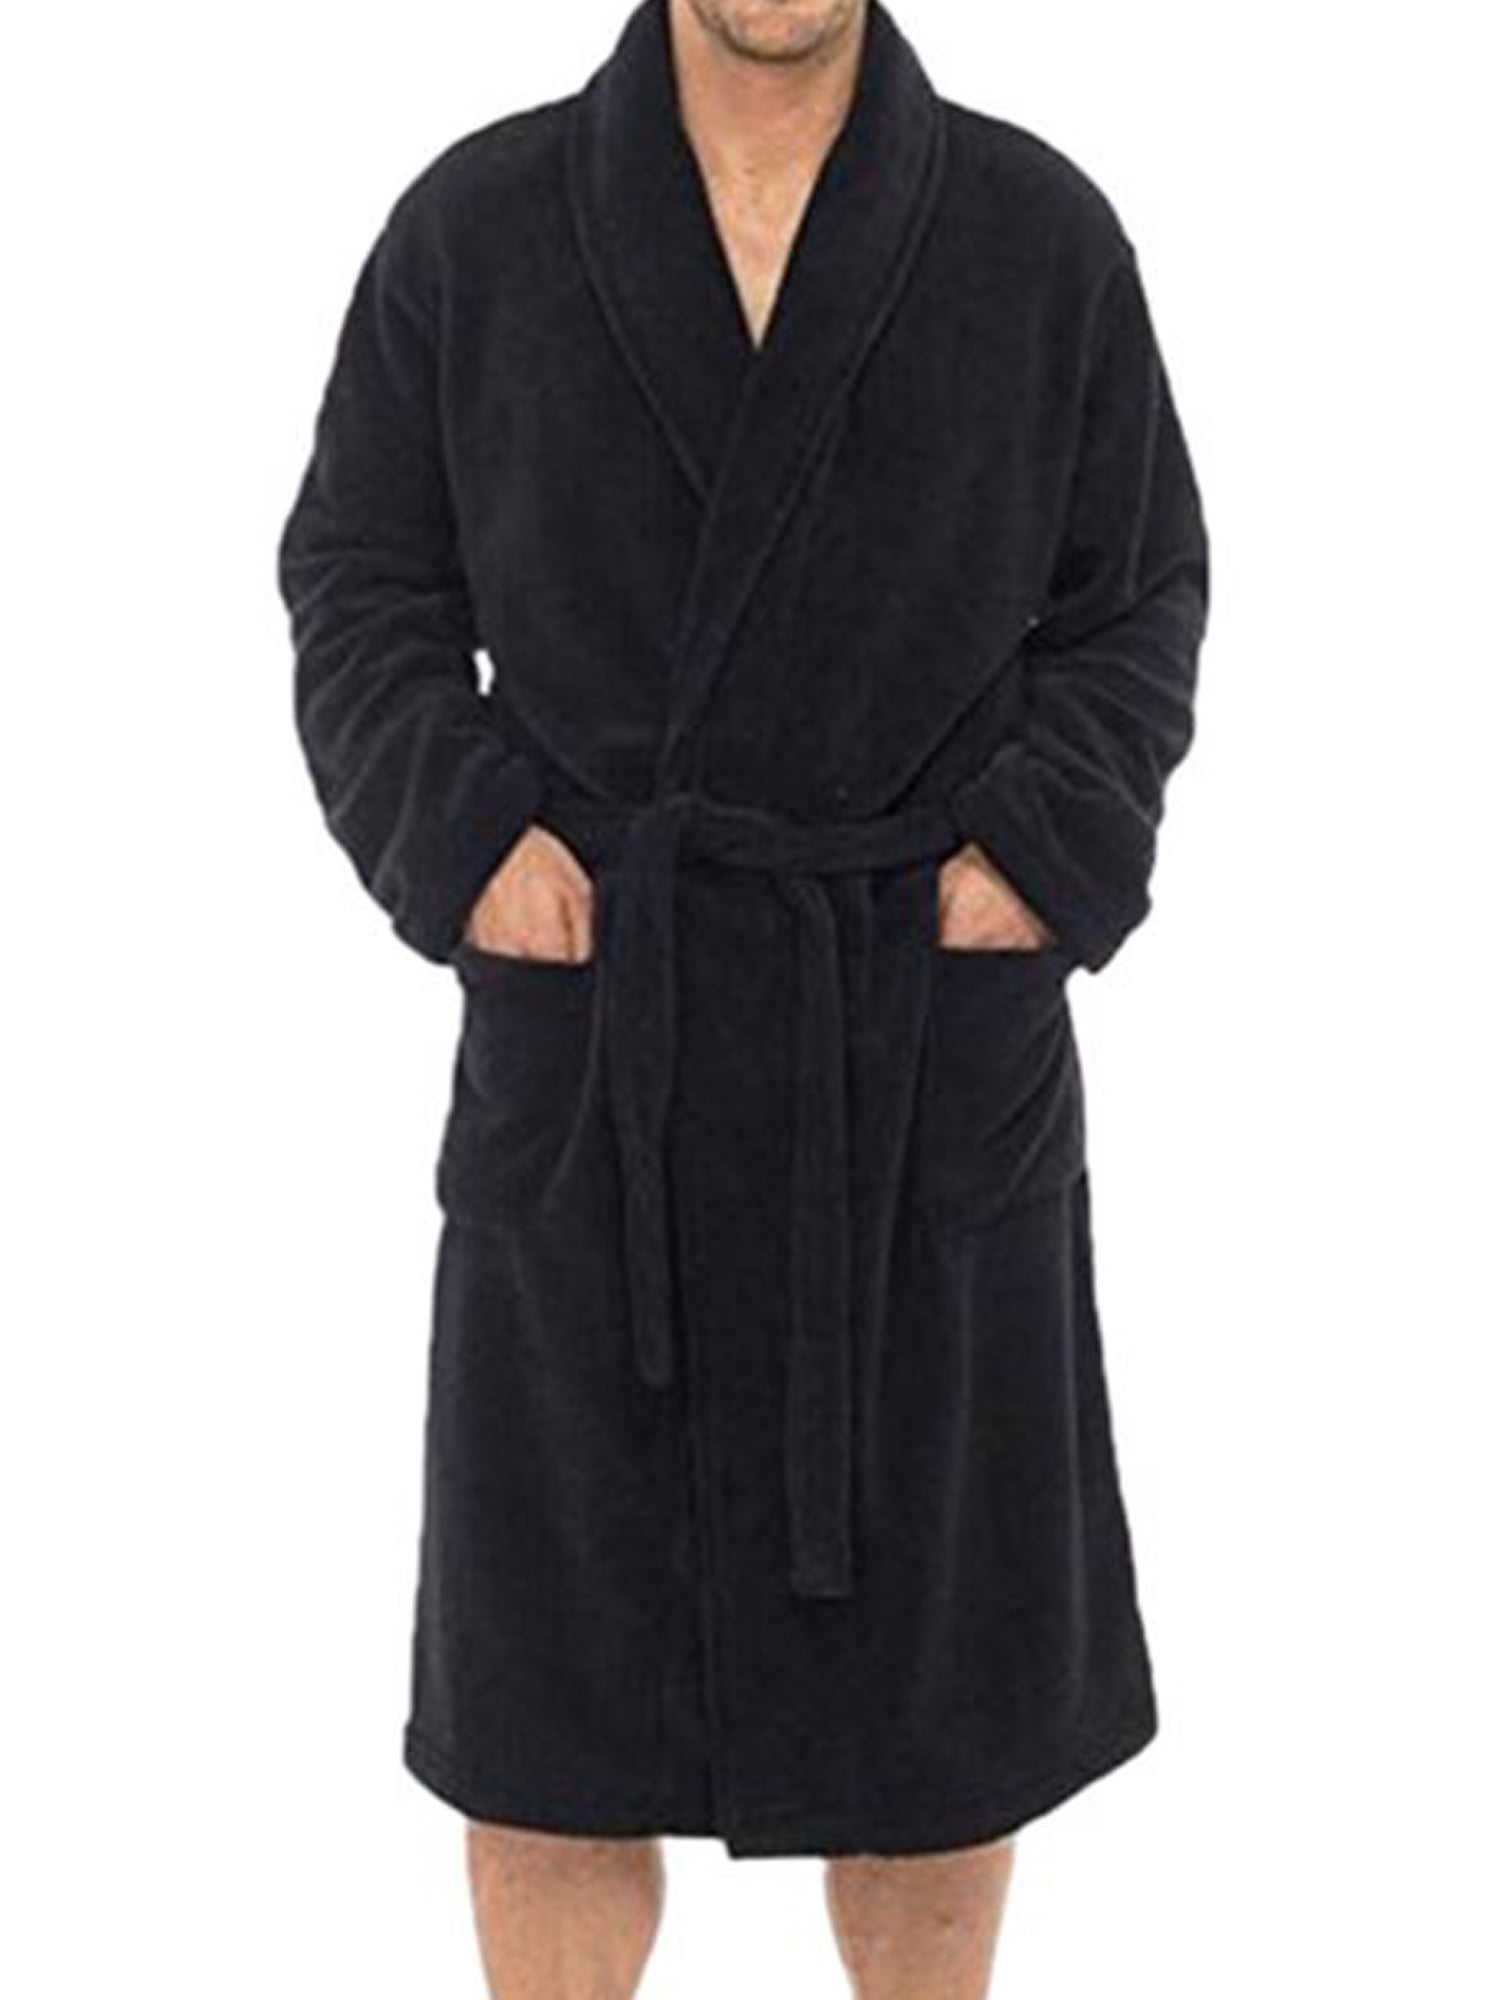 TIFENNY Mens Winter Long Sleeved Robe Coat Hooded Soft Plush Lengthened Shawl Bathrobe Home Clothes Angel